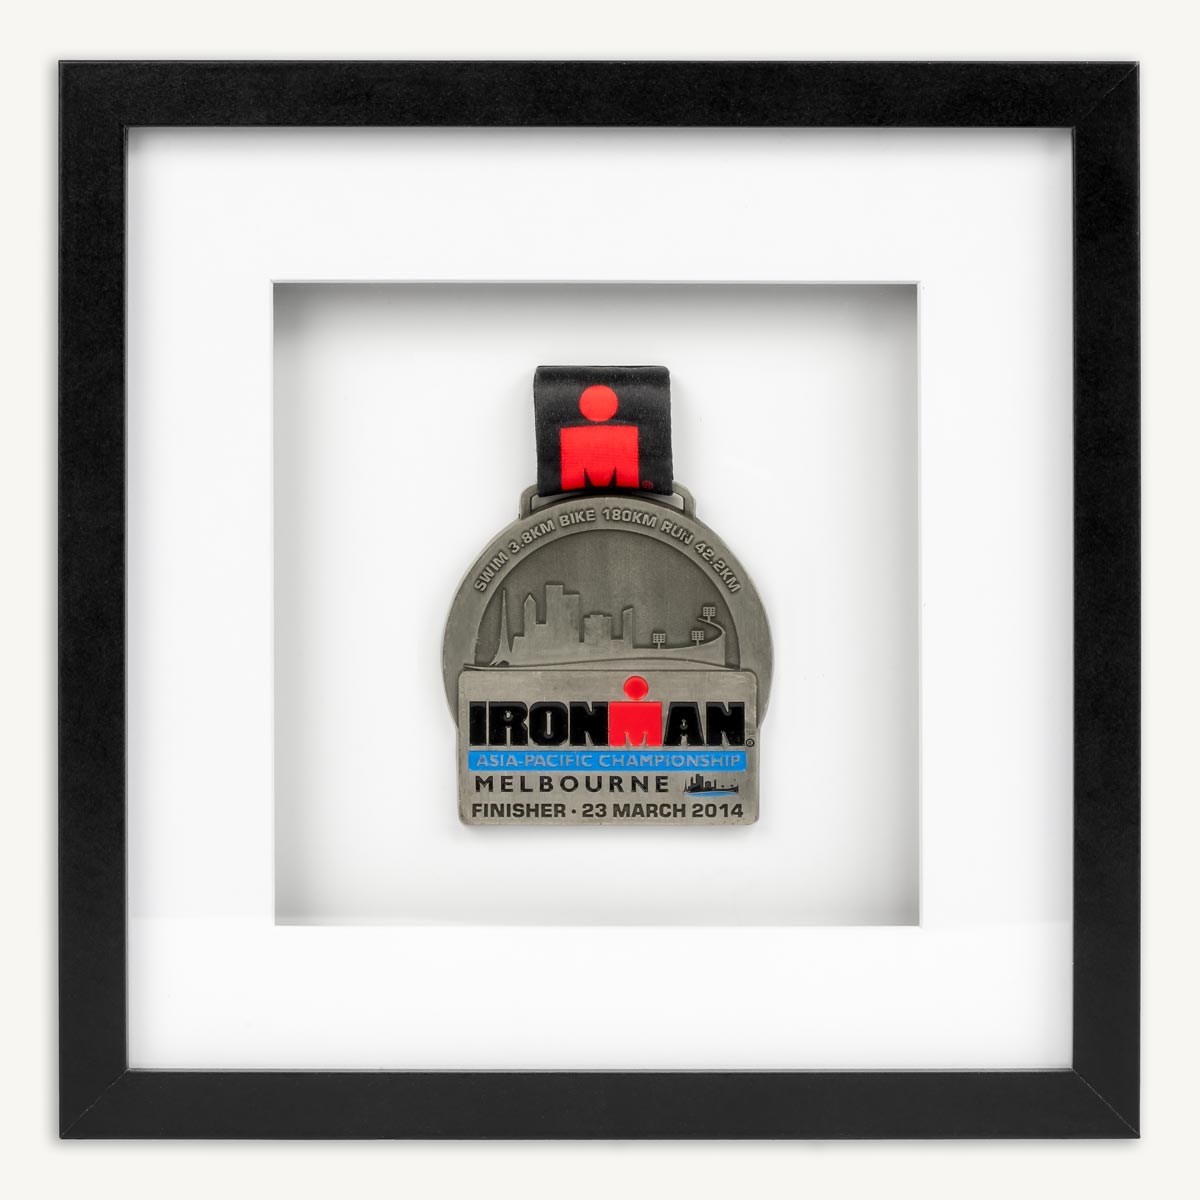 Ironman Melbourne medal in a square black frame